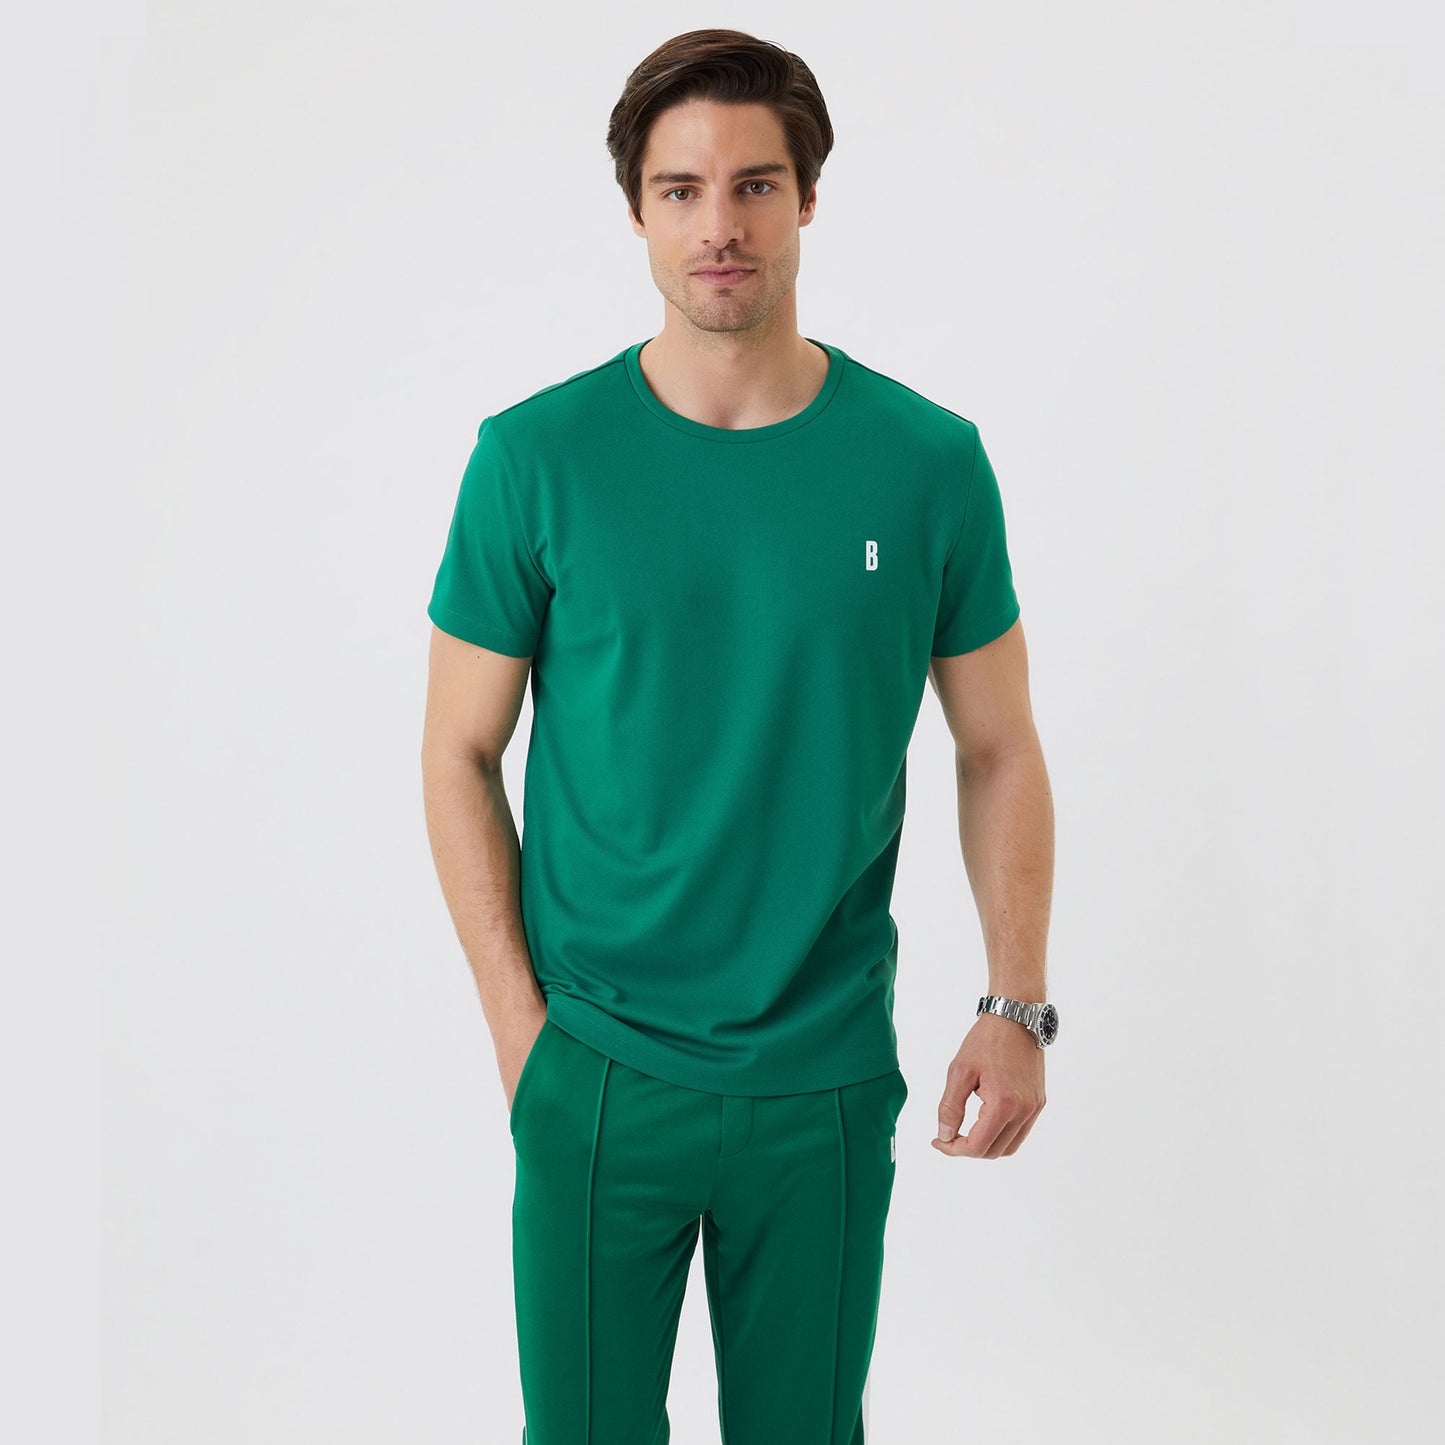 Björn Borg Ace Men's Tennis Shirt Green (1)